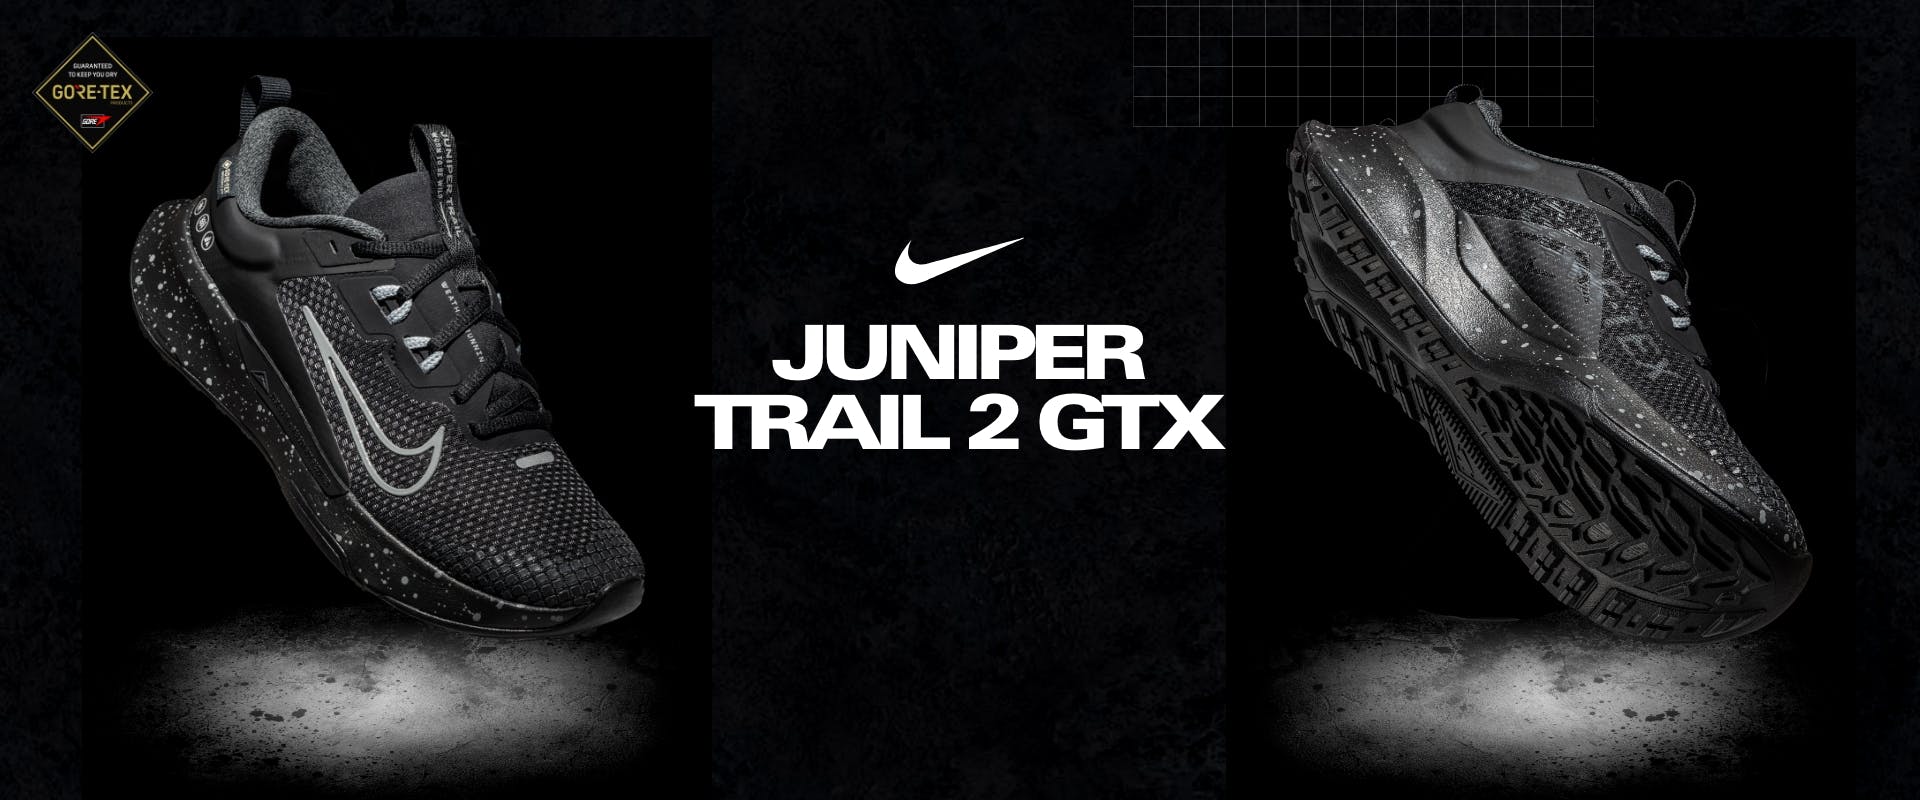 Nike Juniper Trail 2 GTX